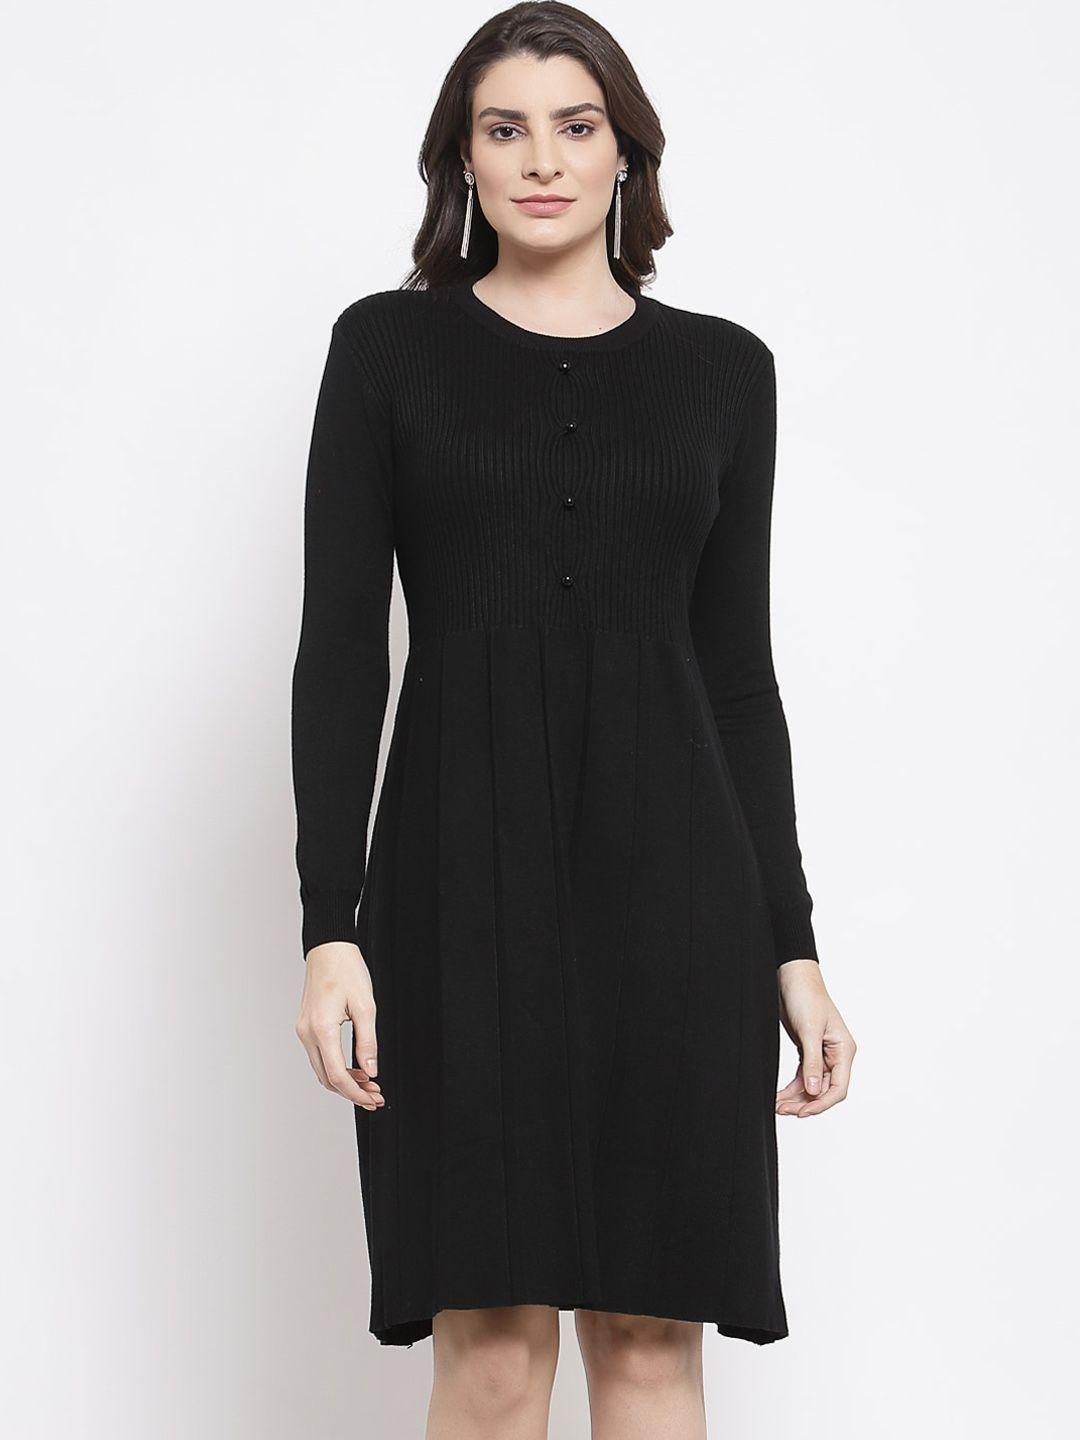 mafadeny black sweater dress